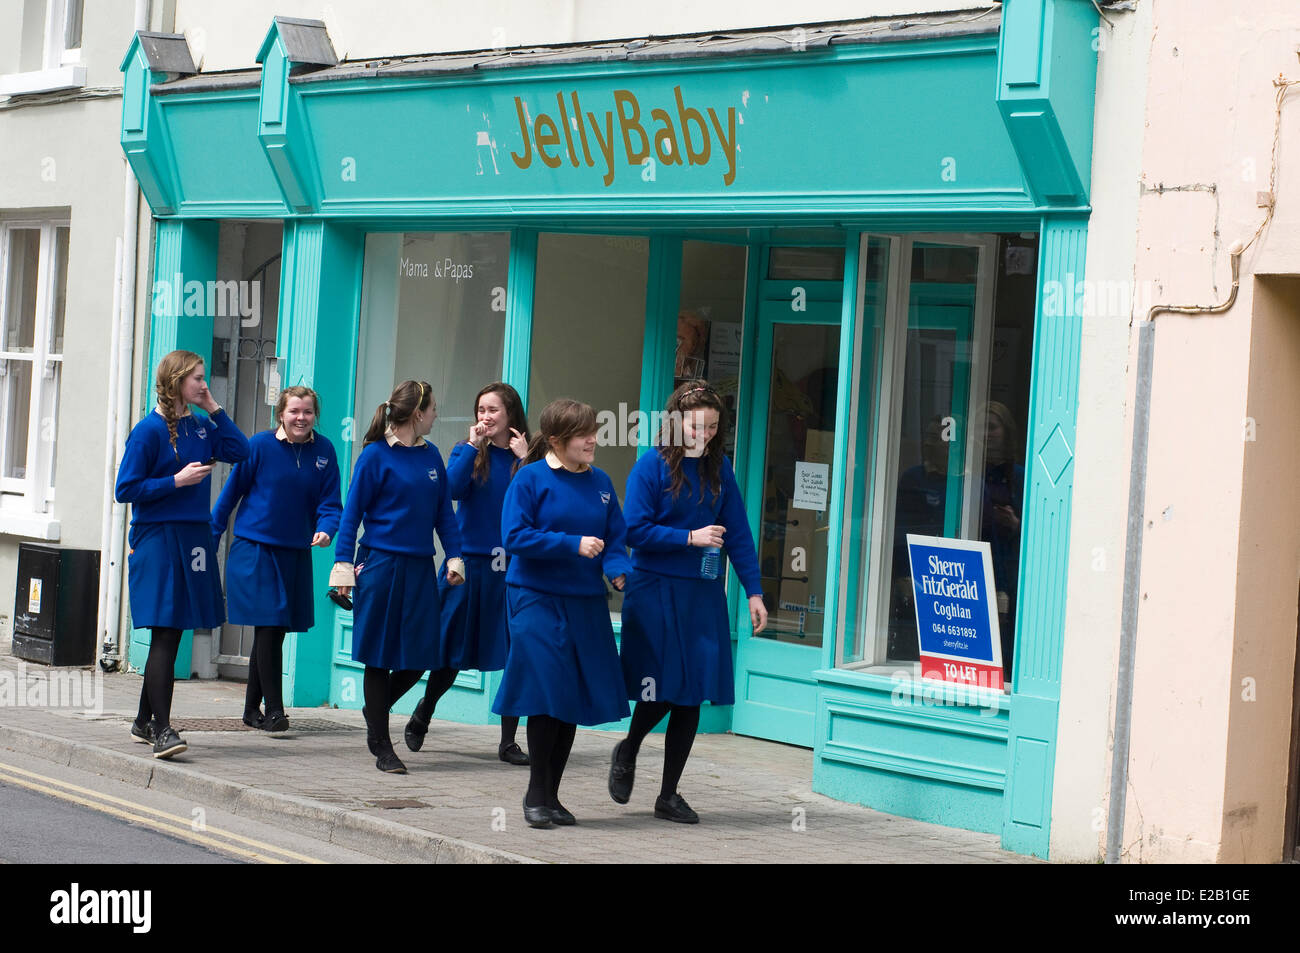 Ireland, County Kerry, Killarney, schoolgirls in uniform on the street Stock Photo